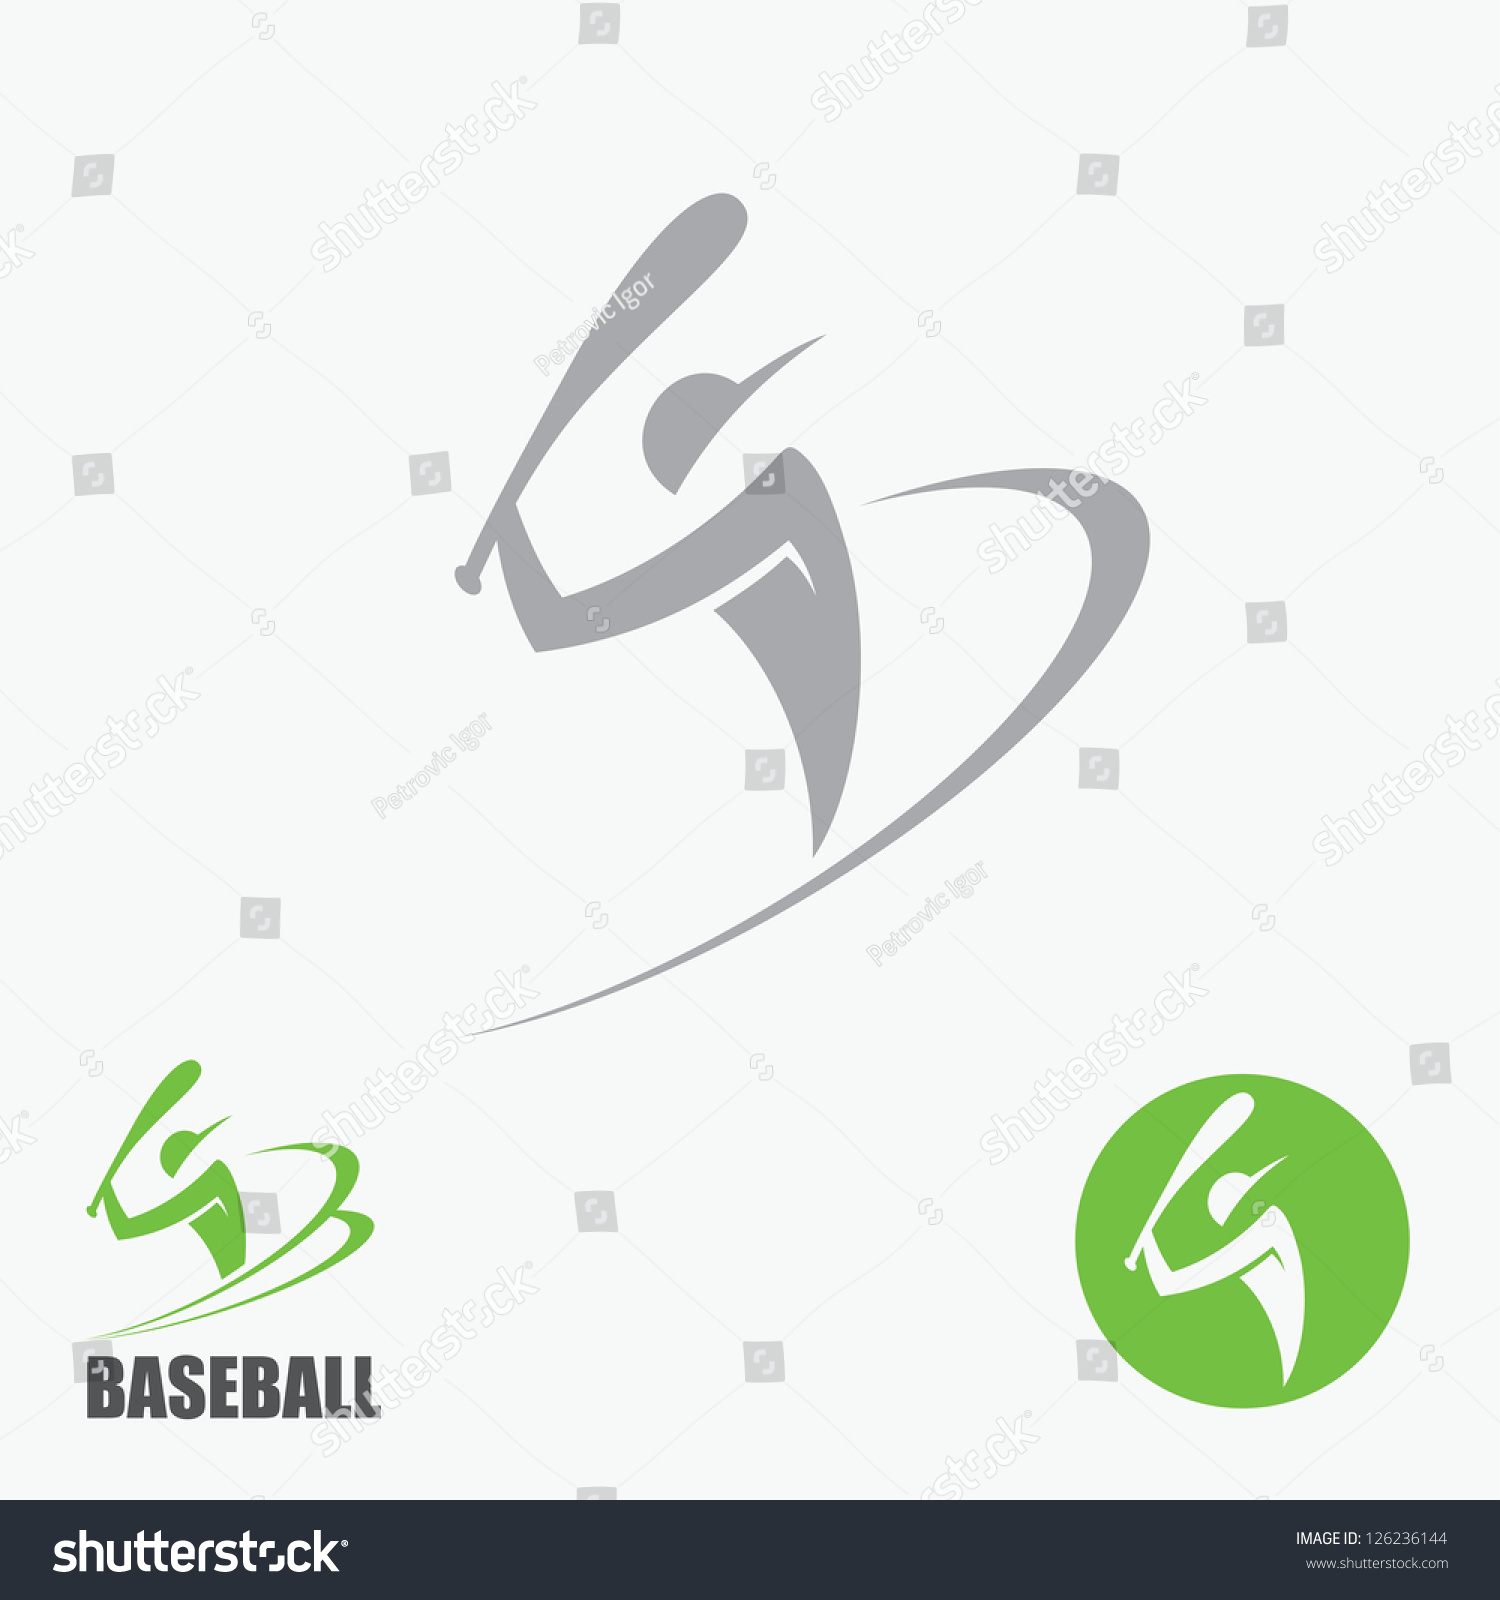 Baseball Player Icon - Vector Illustration - 126236144 : Shutterstock